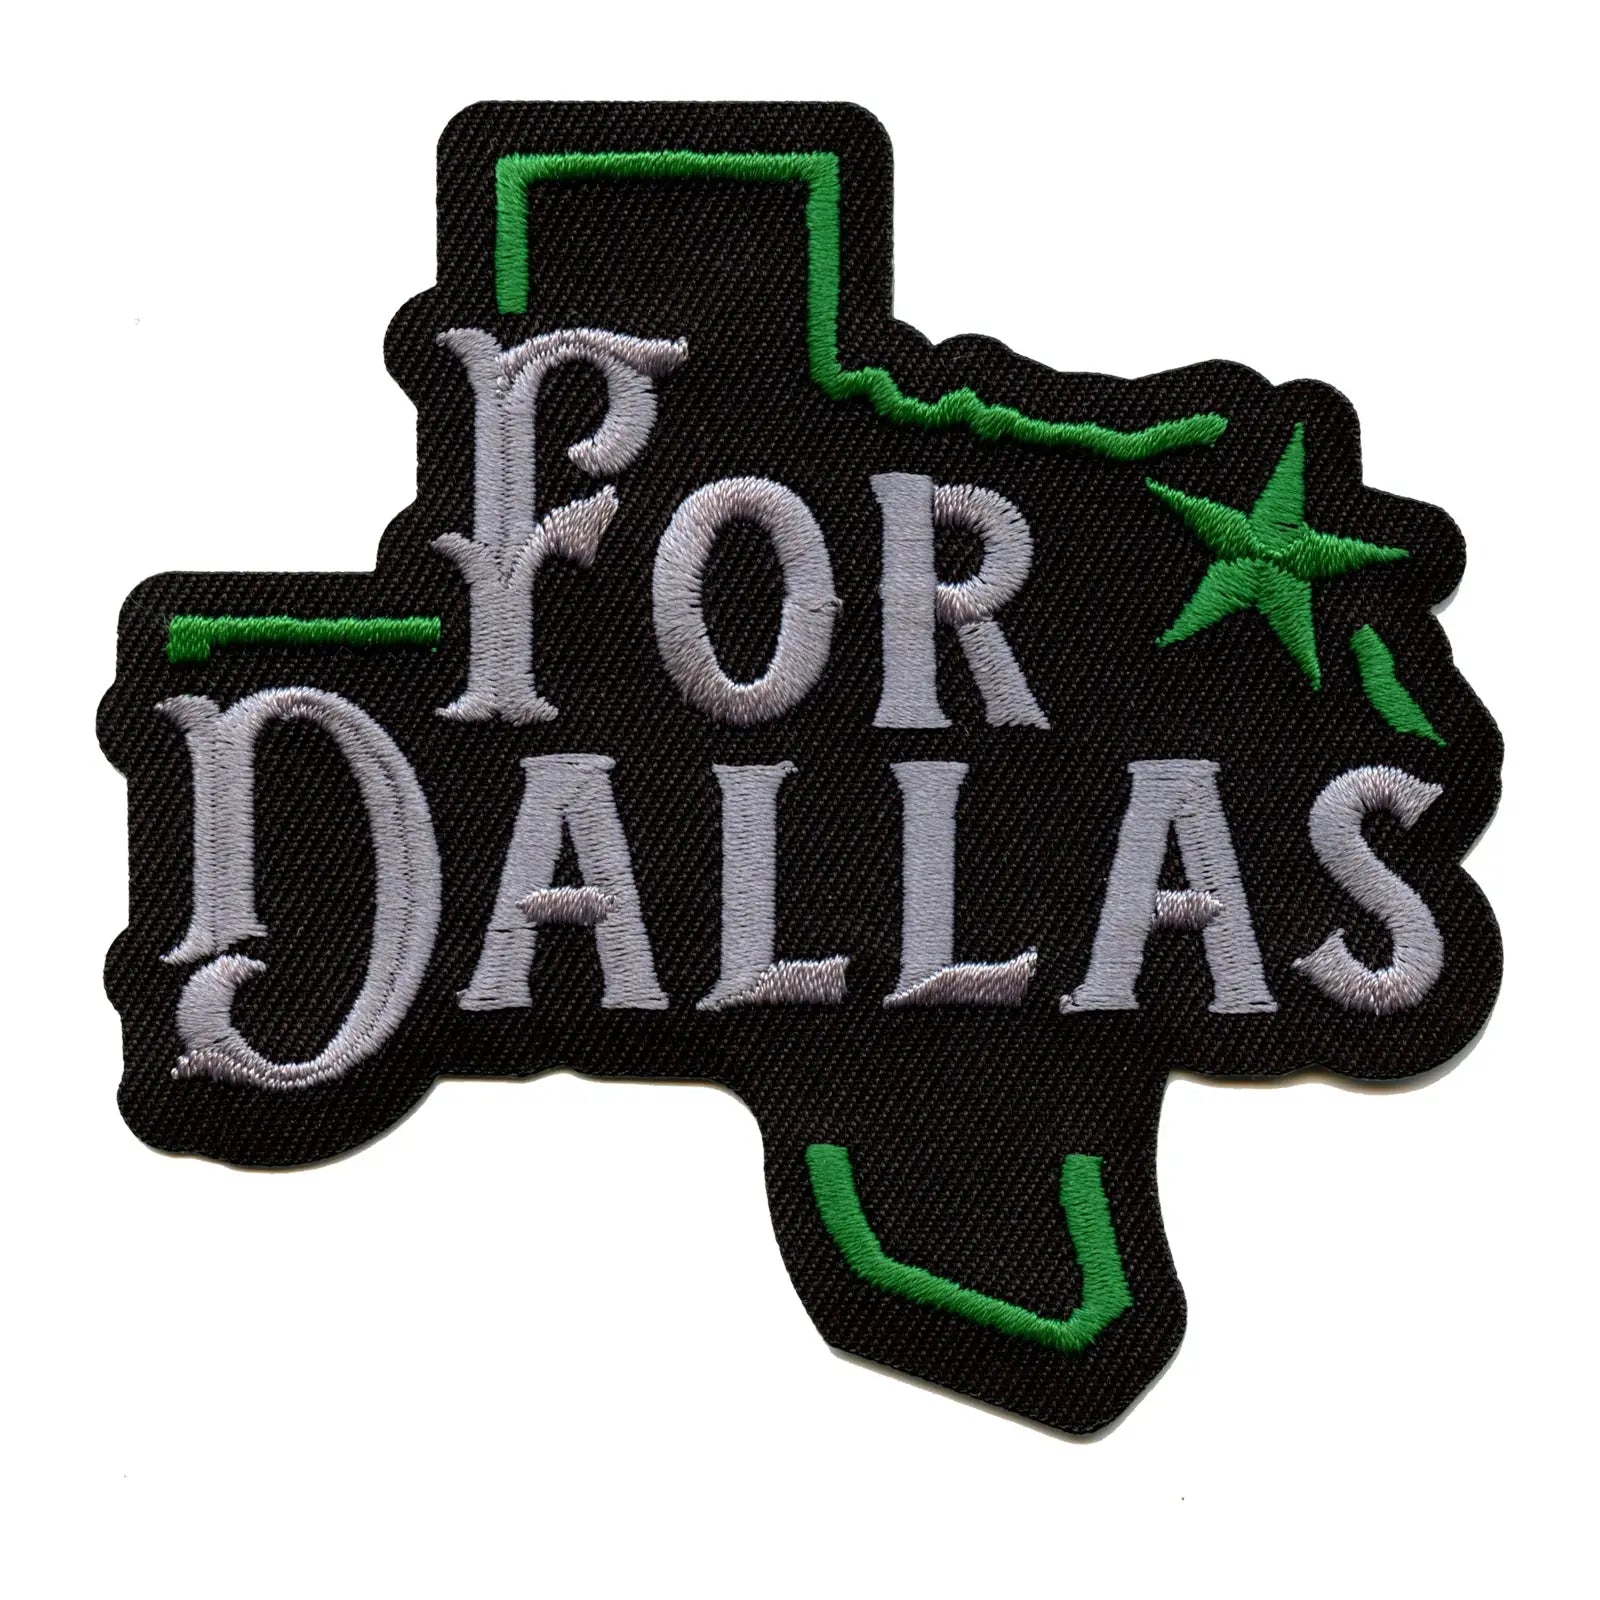 DIY Dallas Cowboys Patch Iron On - Show Your Team Pride!